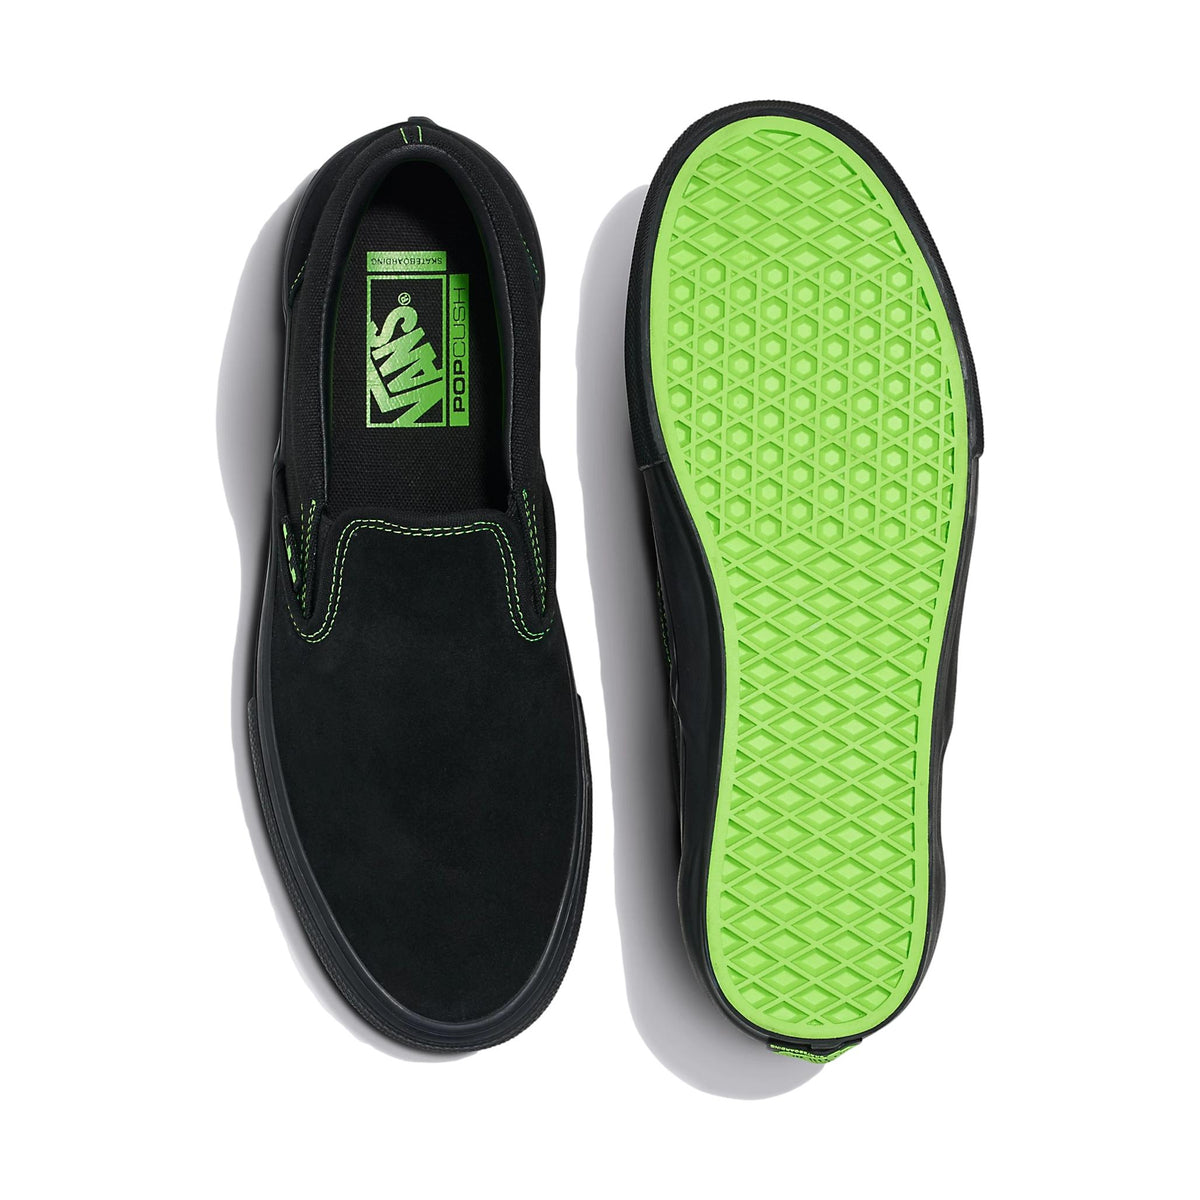 Vans Skate Slip-On Black/Green - Venue Skateboards